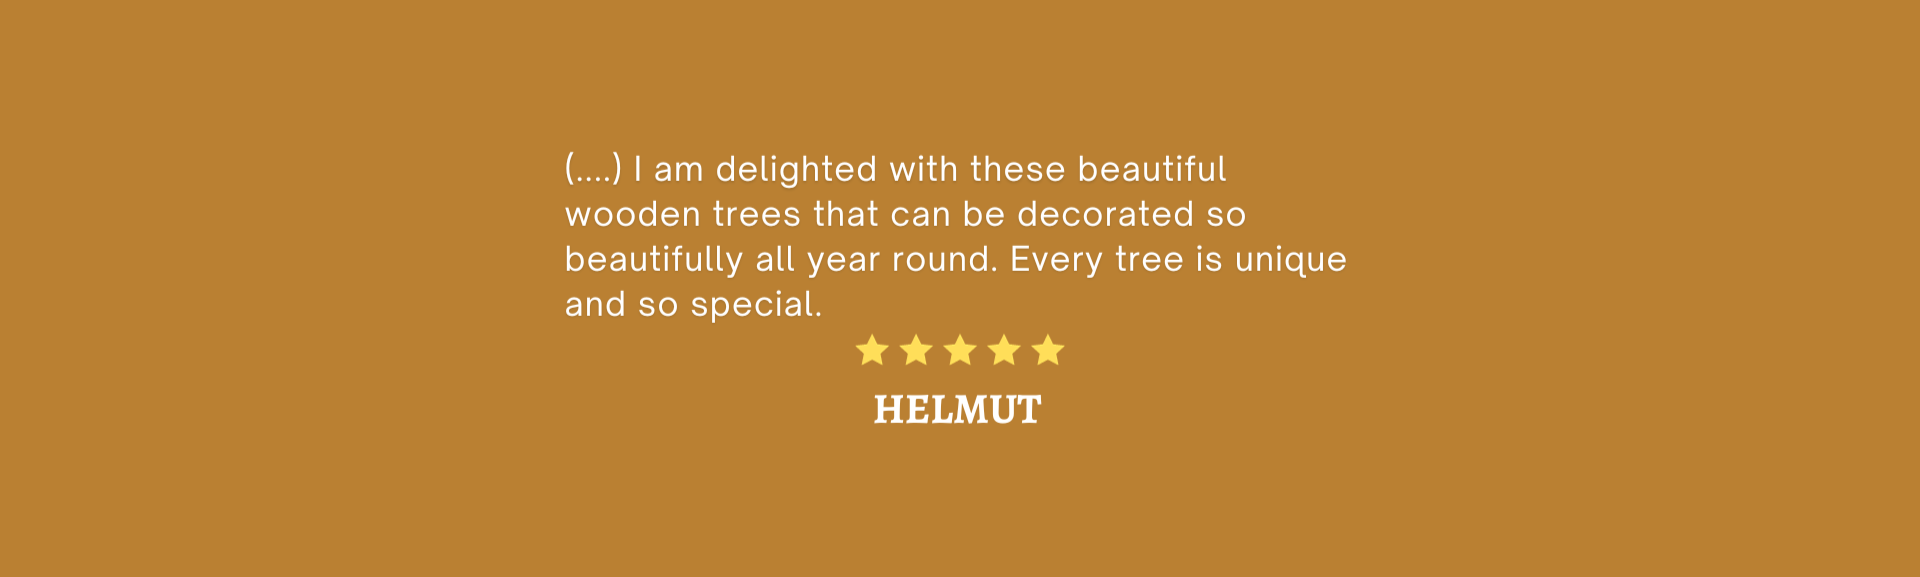 Review Helmut